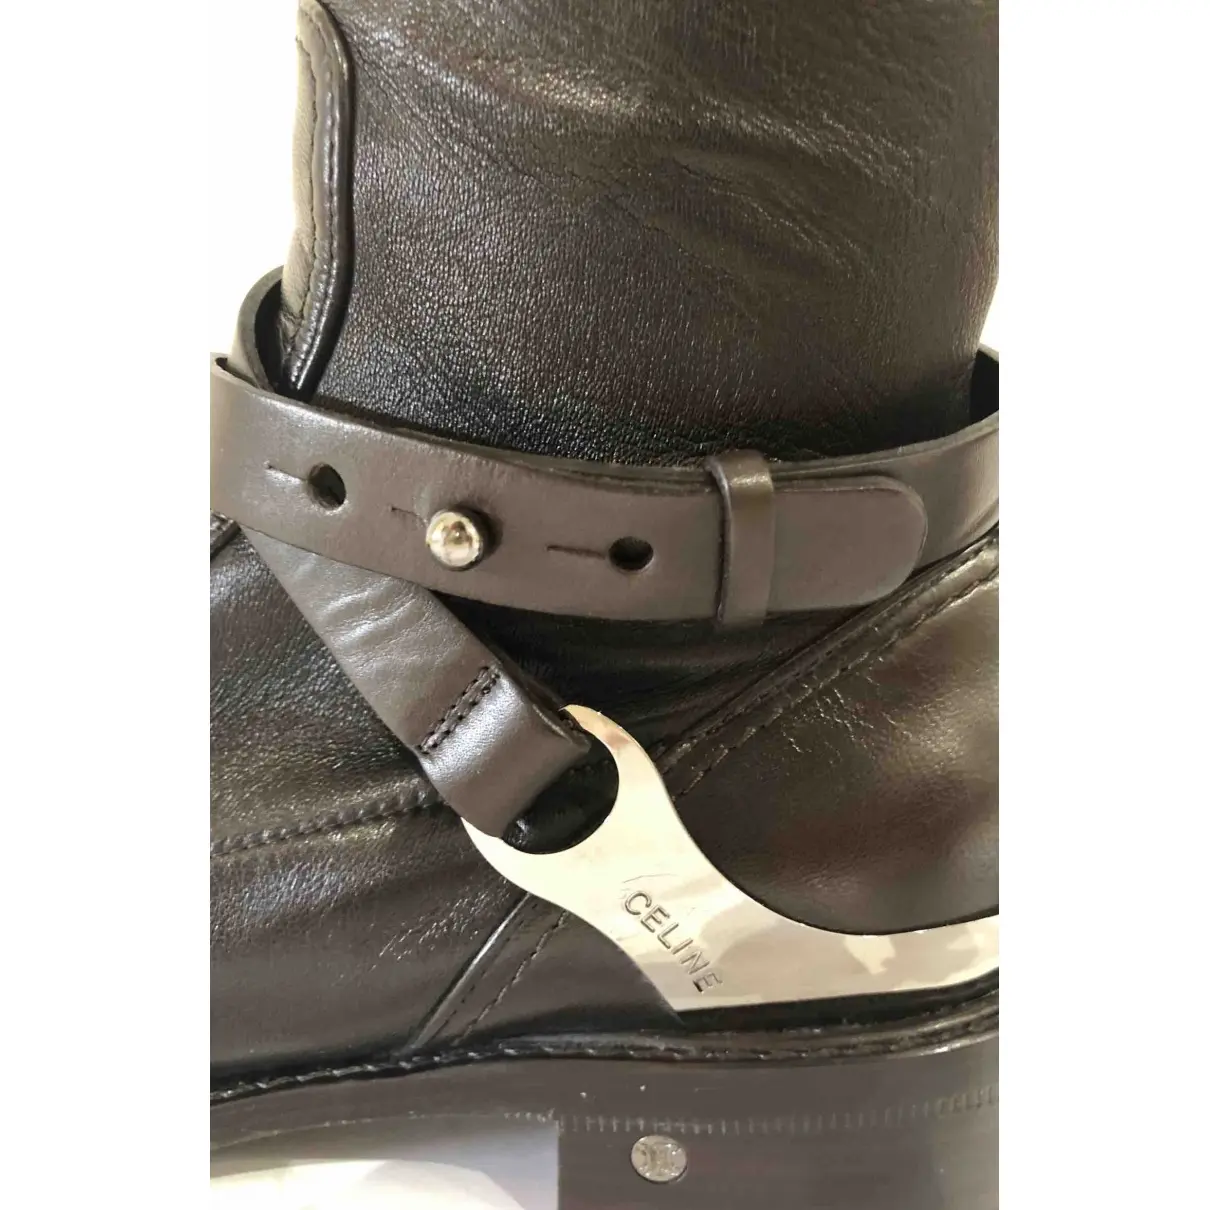 Leather riding boots Celine - Vintage